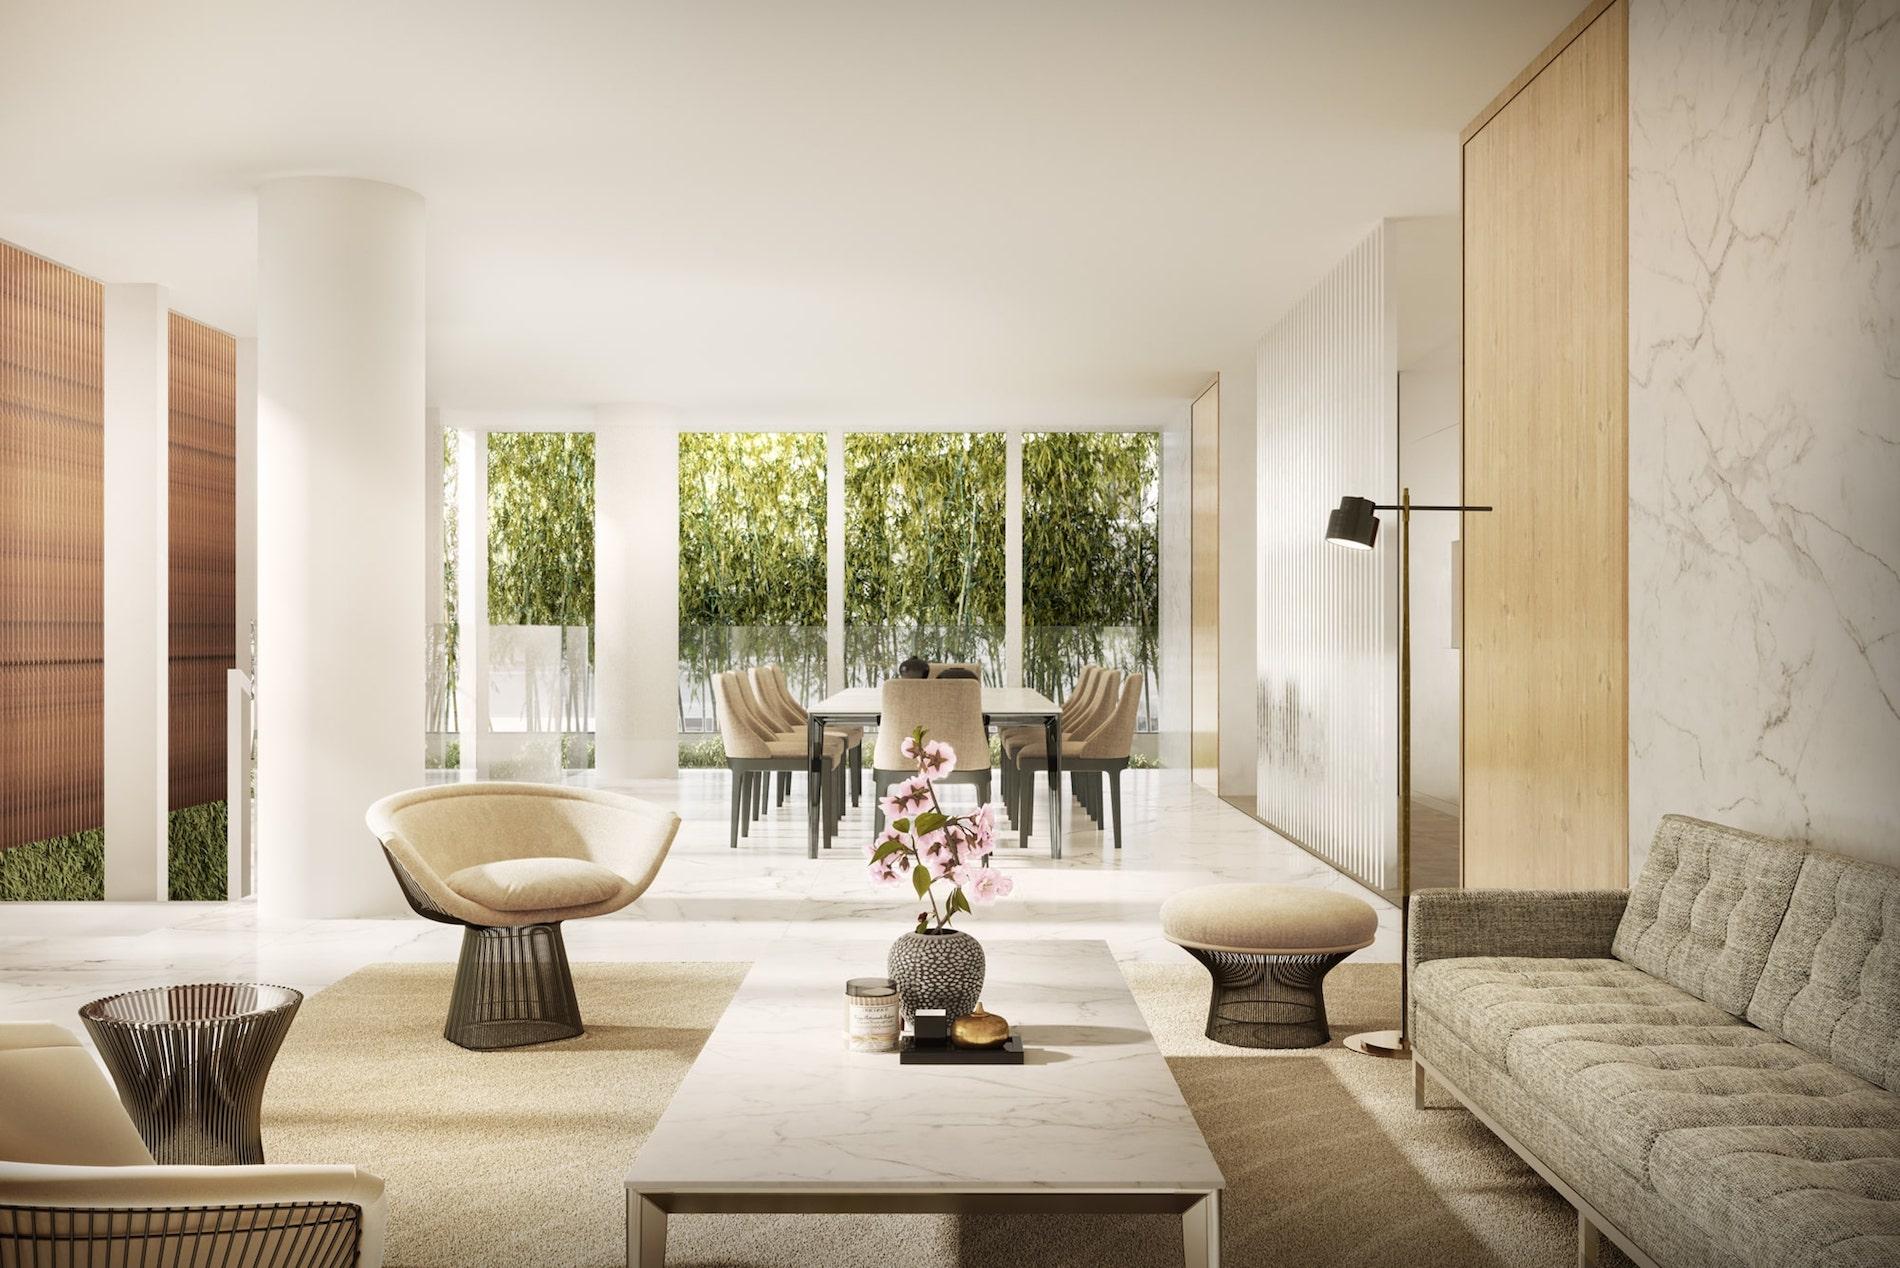 Kengo Kuma’s The Kita Is Asia’s Newest Luxury Property To Watch